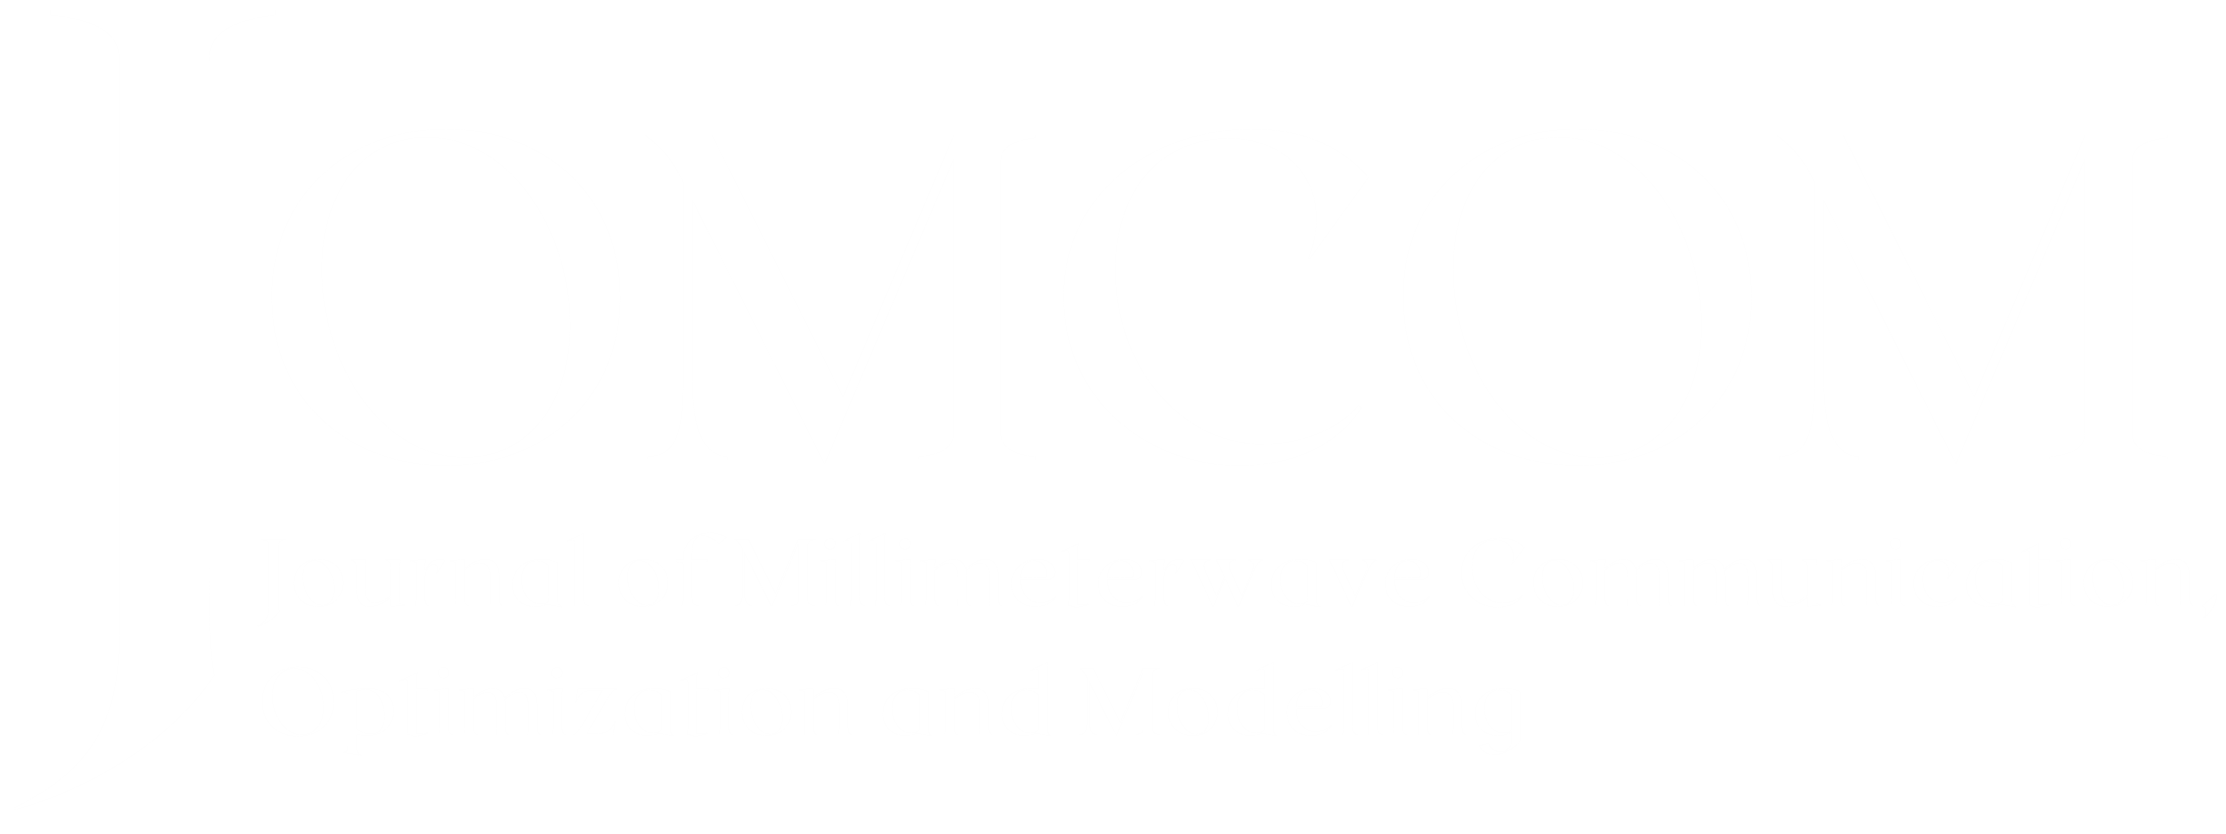 Journal of Millimeterwave Communication, Optimization and Modelling